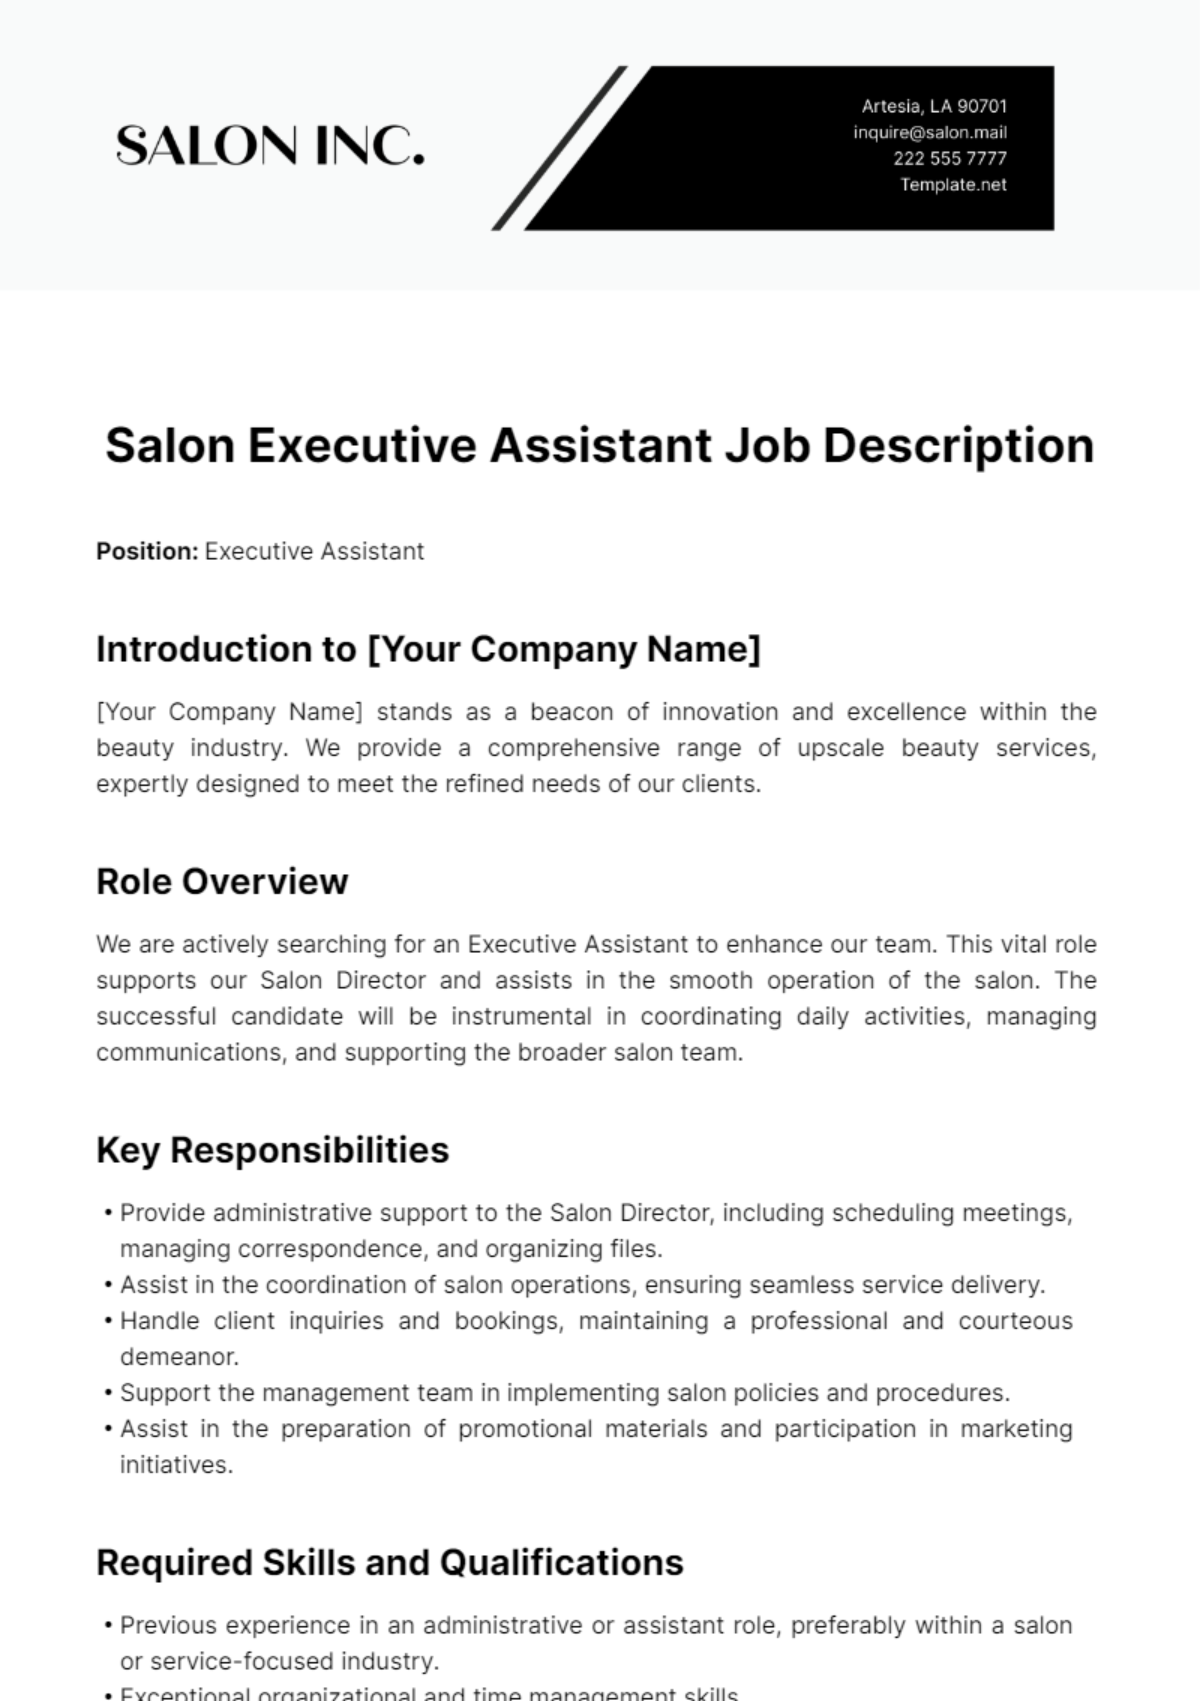 Free Salon Executive Assistant Job Description Template